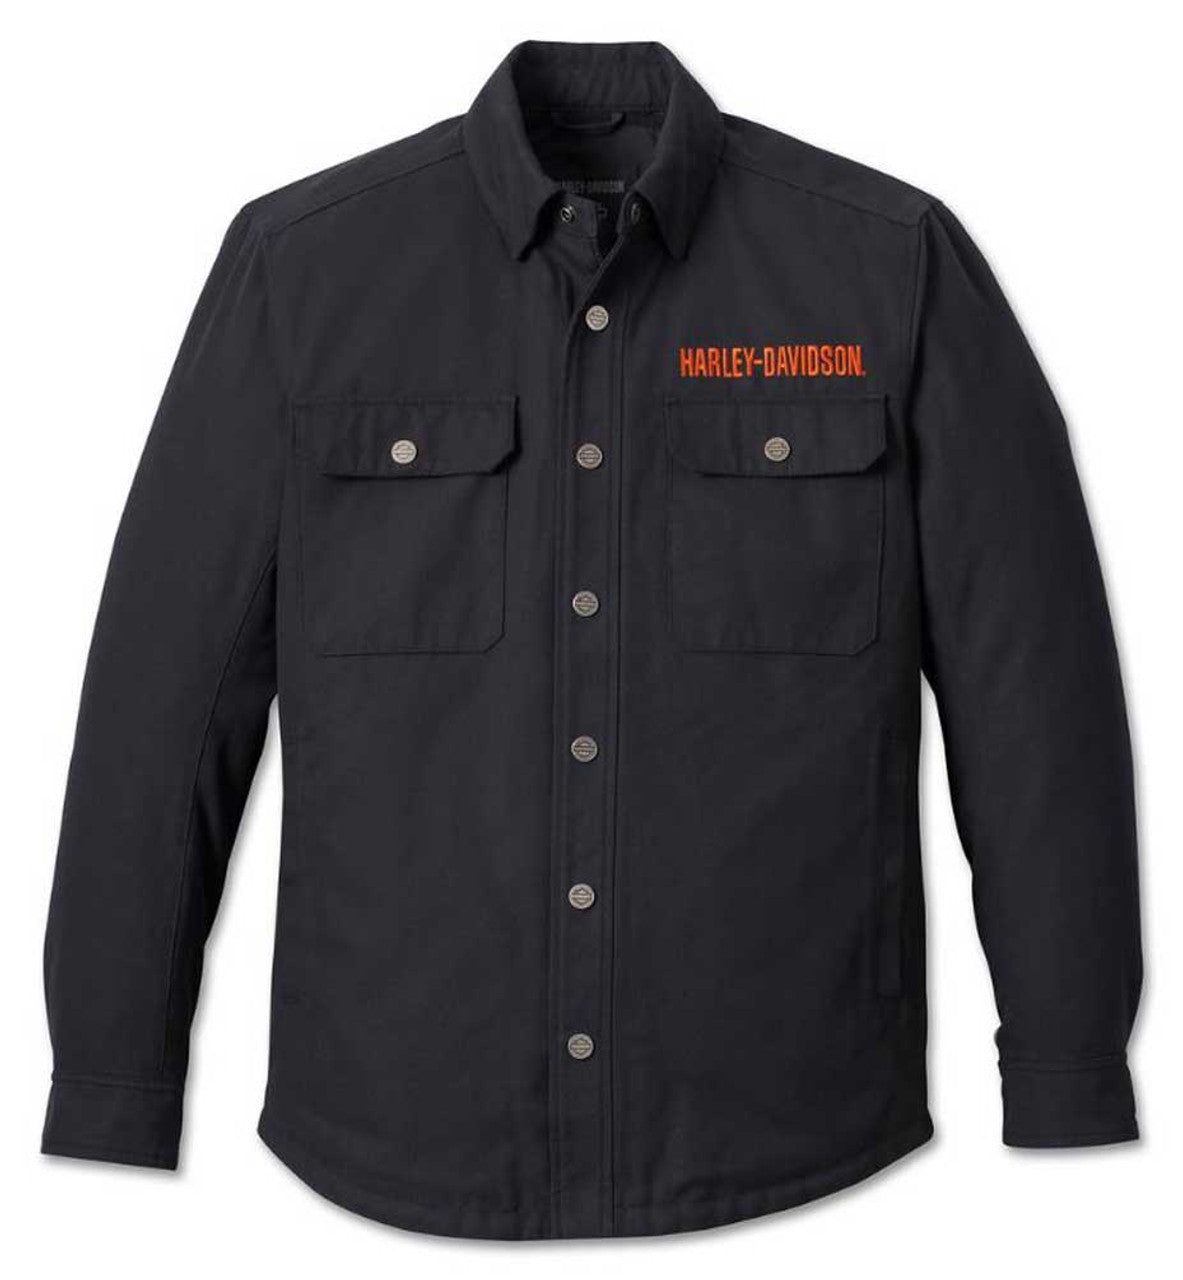 Harley-Davidson Men's Operative Riding Shirt Jacket